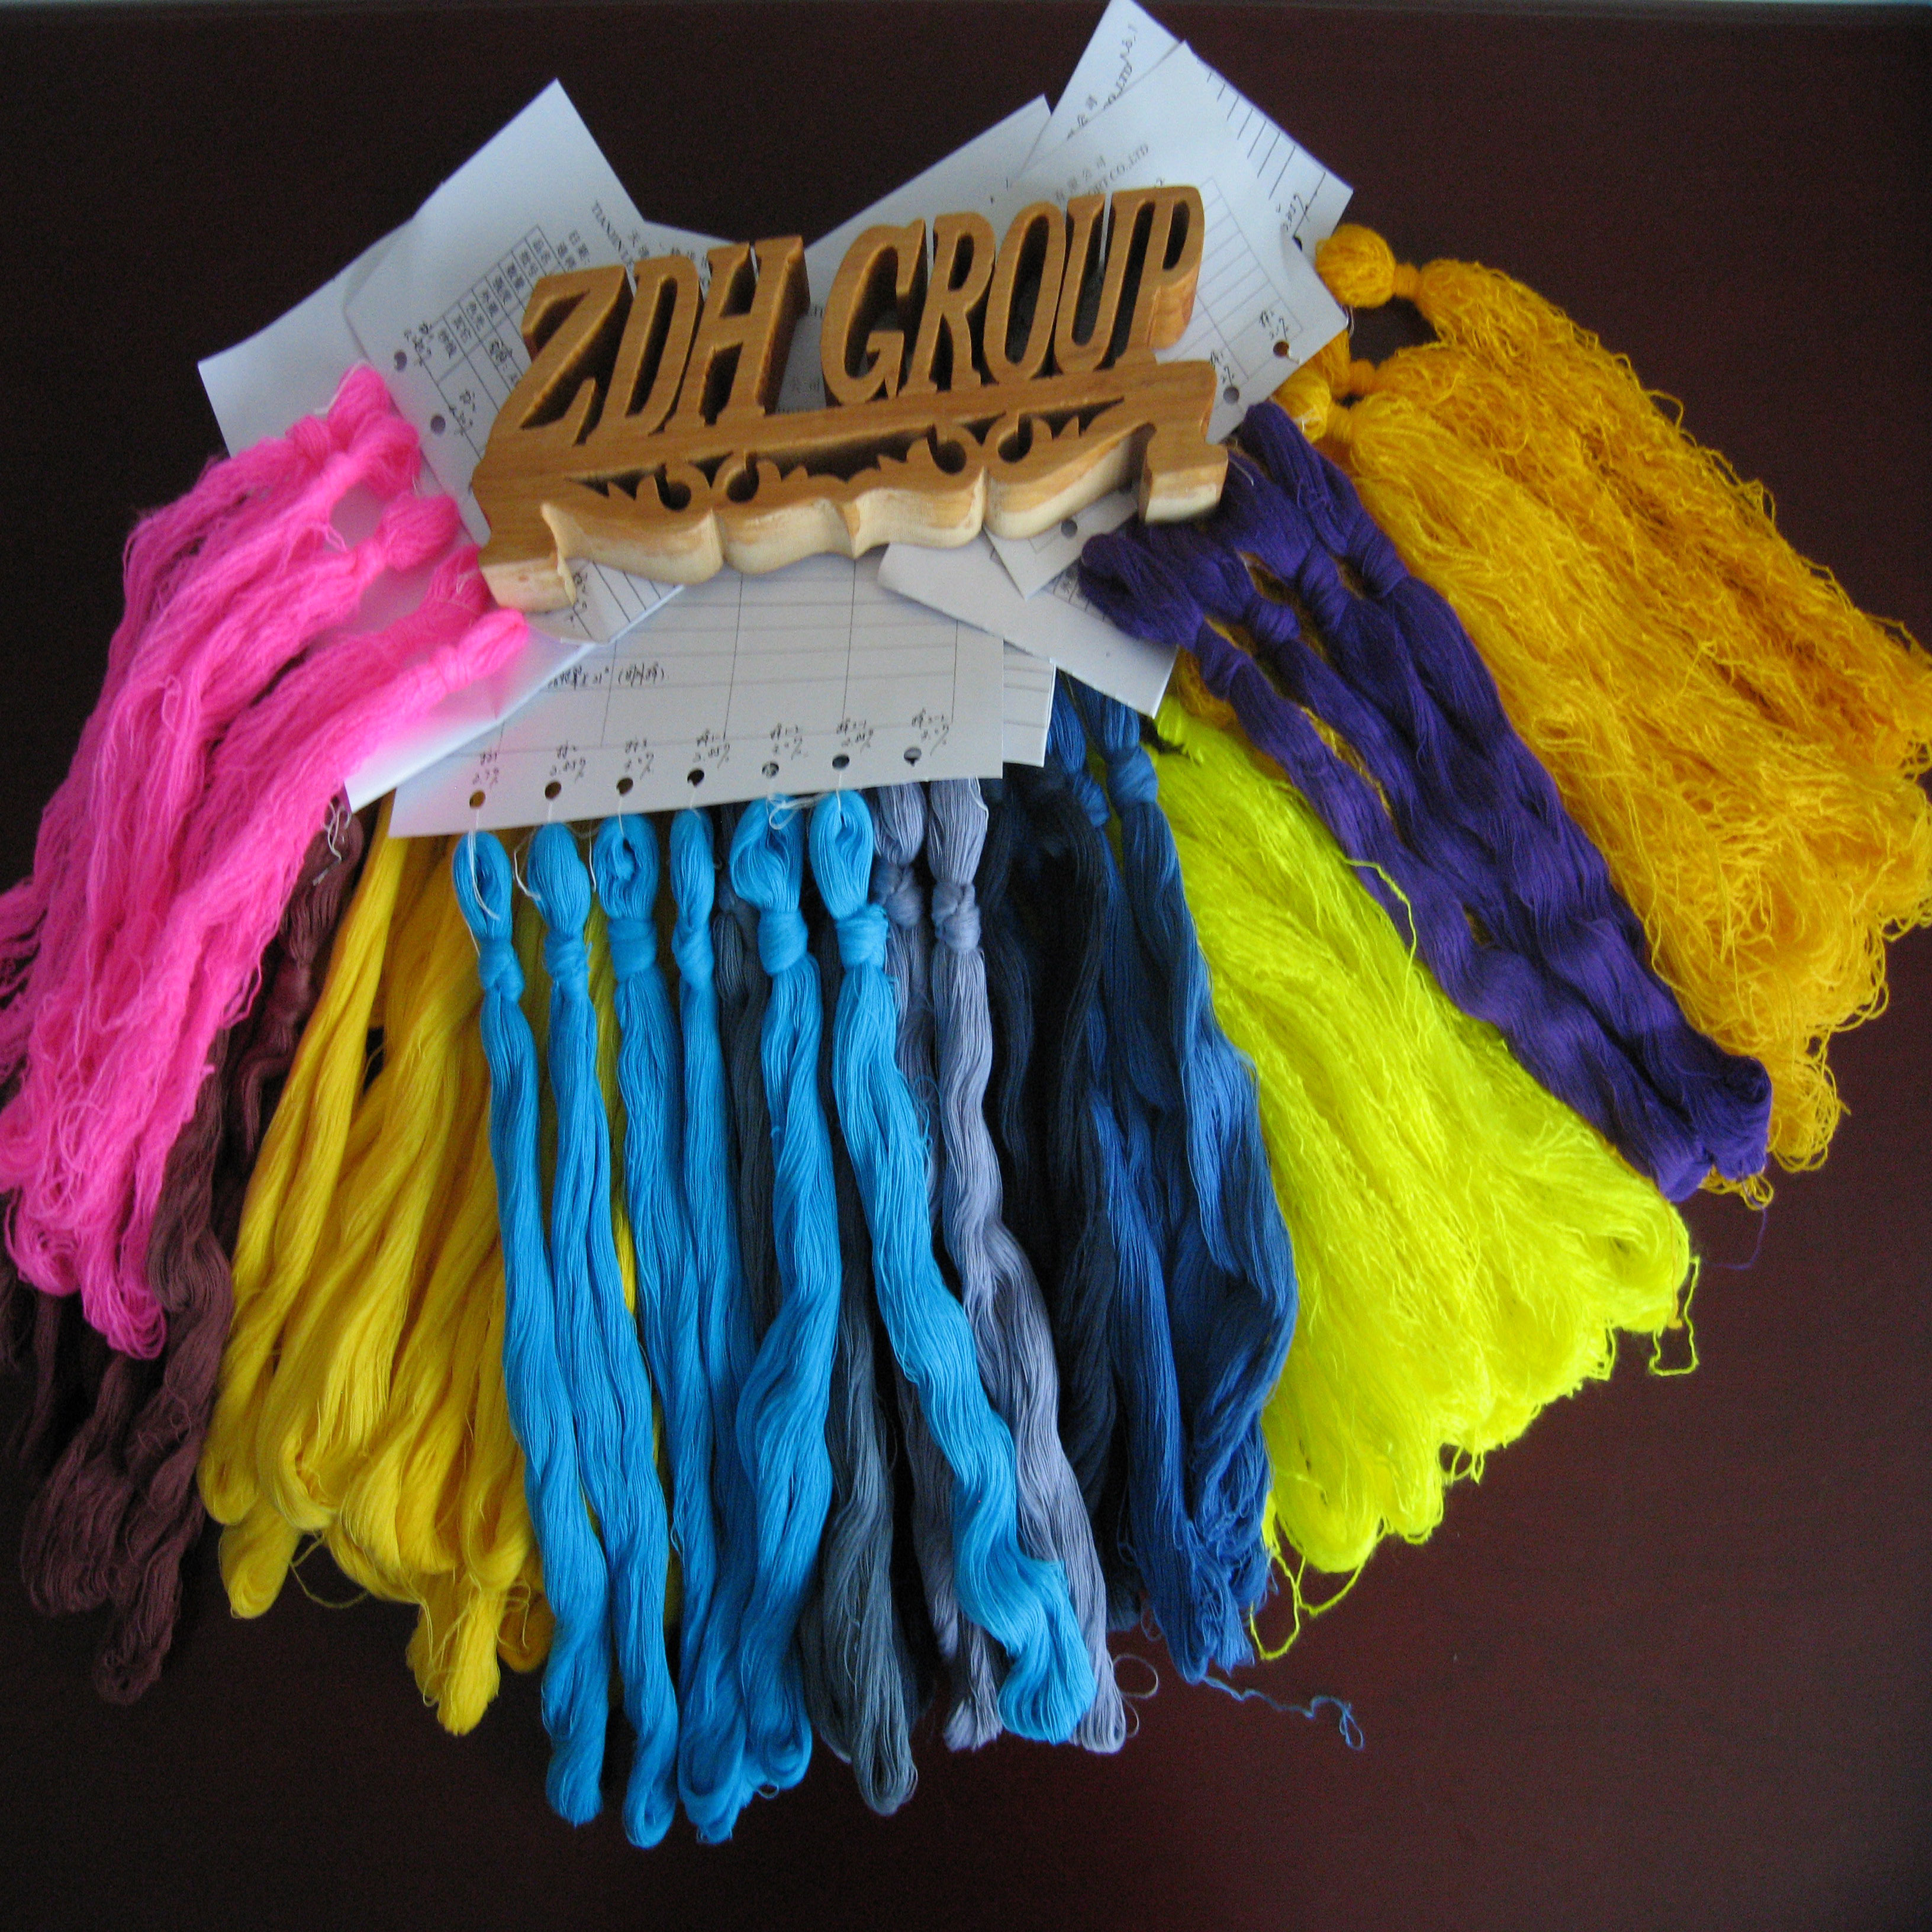 Sulphur Dyes